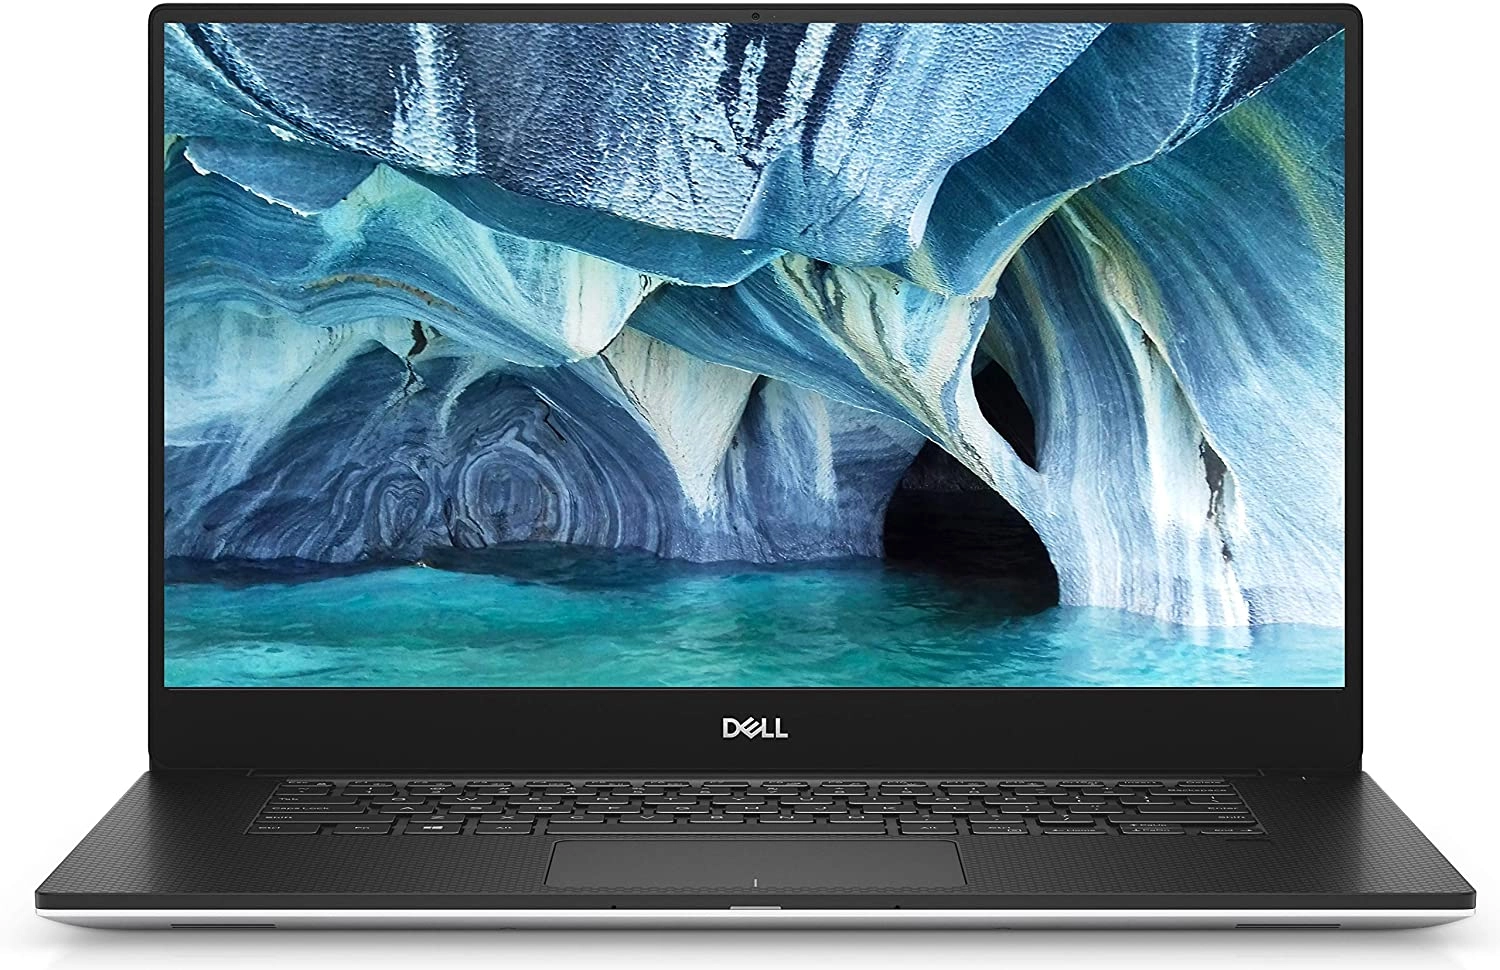 Dell XPS 15 7590 laptop image